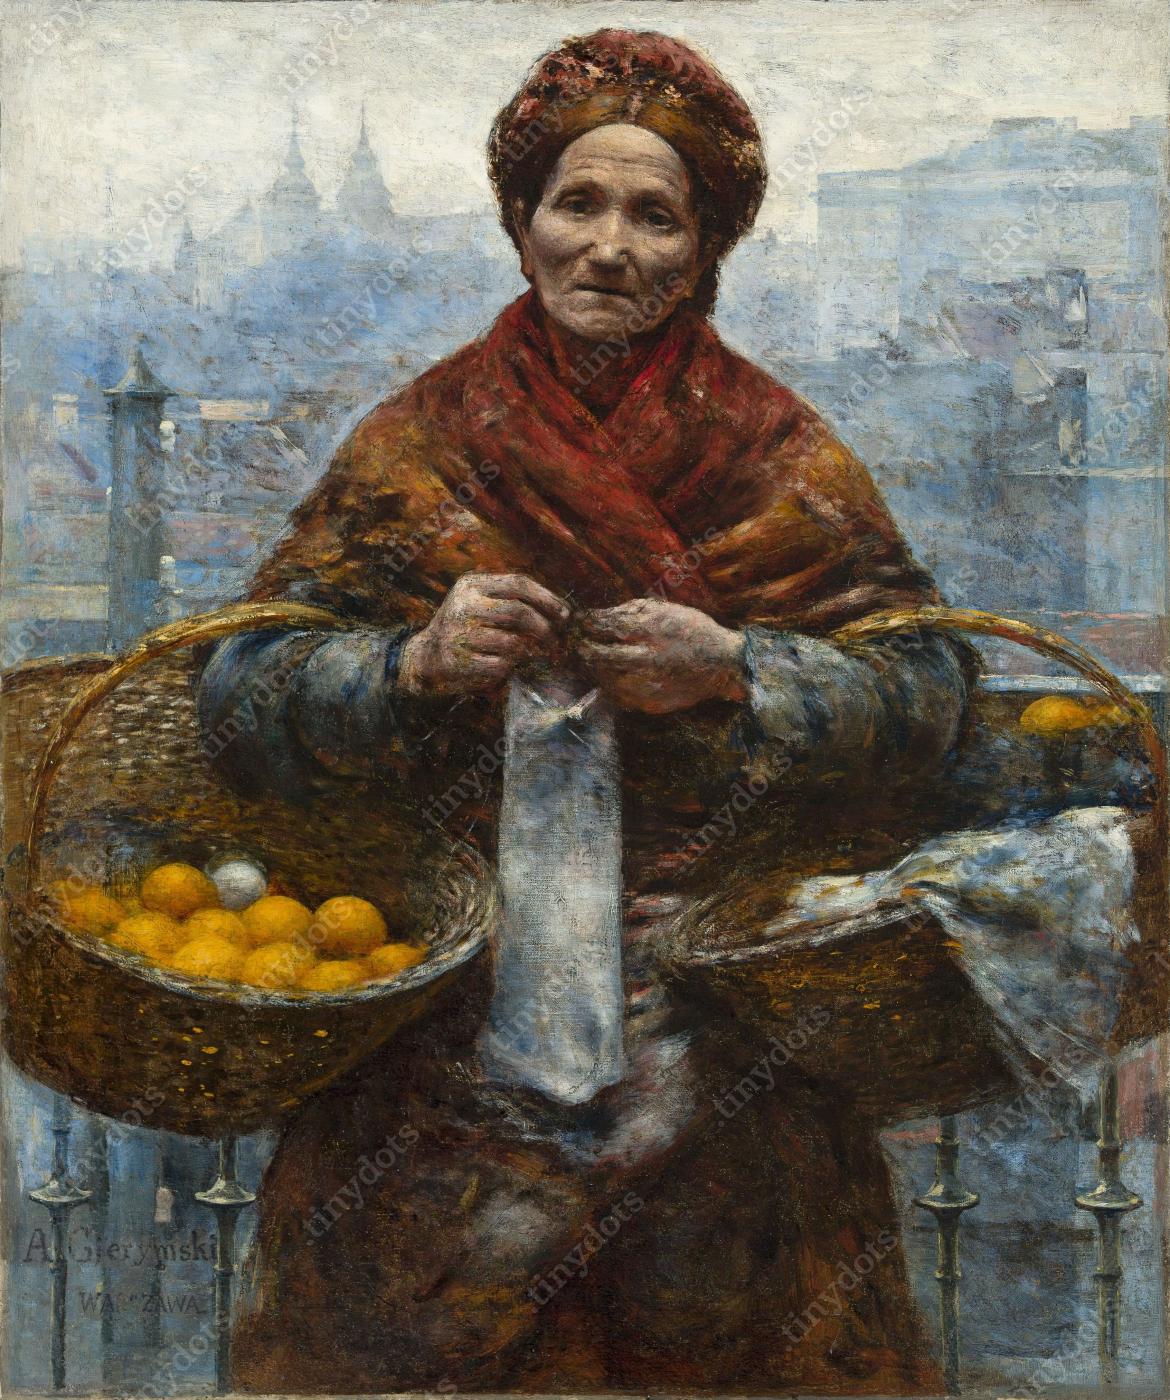 Ingelijste afbeelding op canvas Aleksander Gierymski - Jodin met sinaasappels 1881